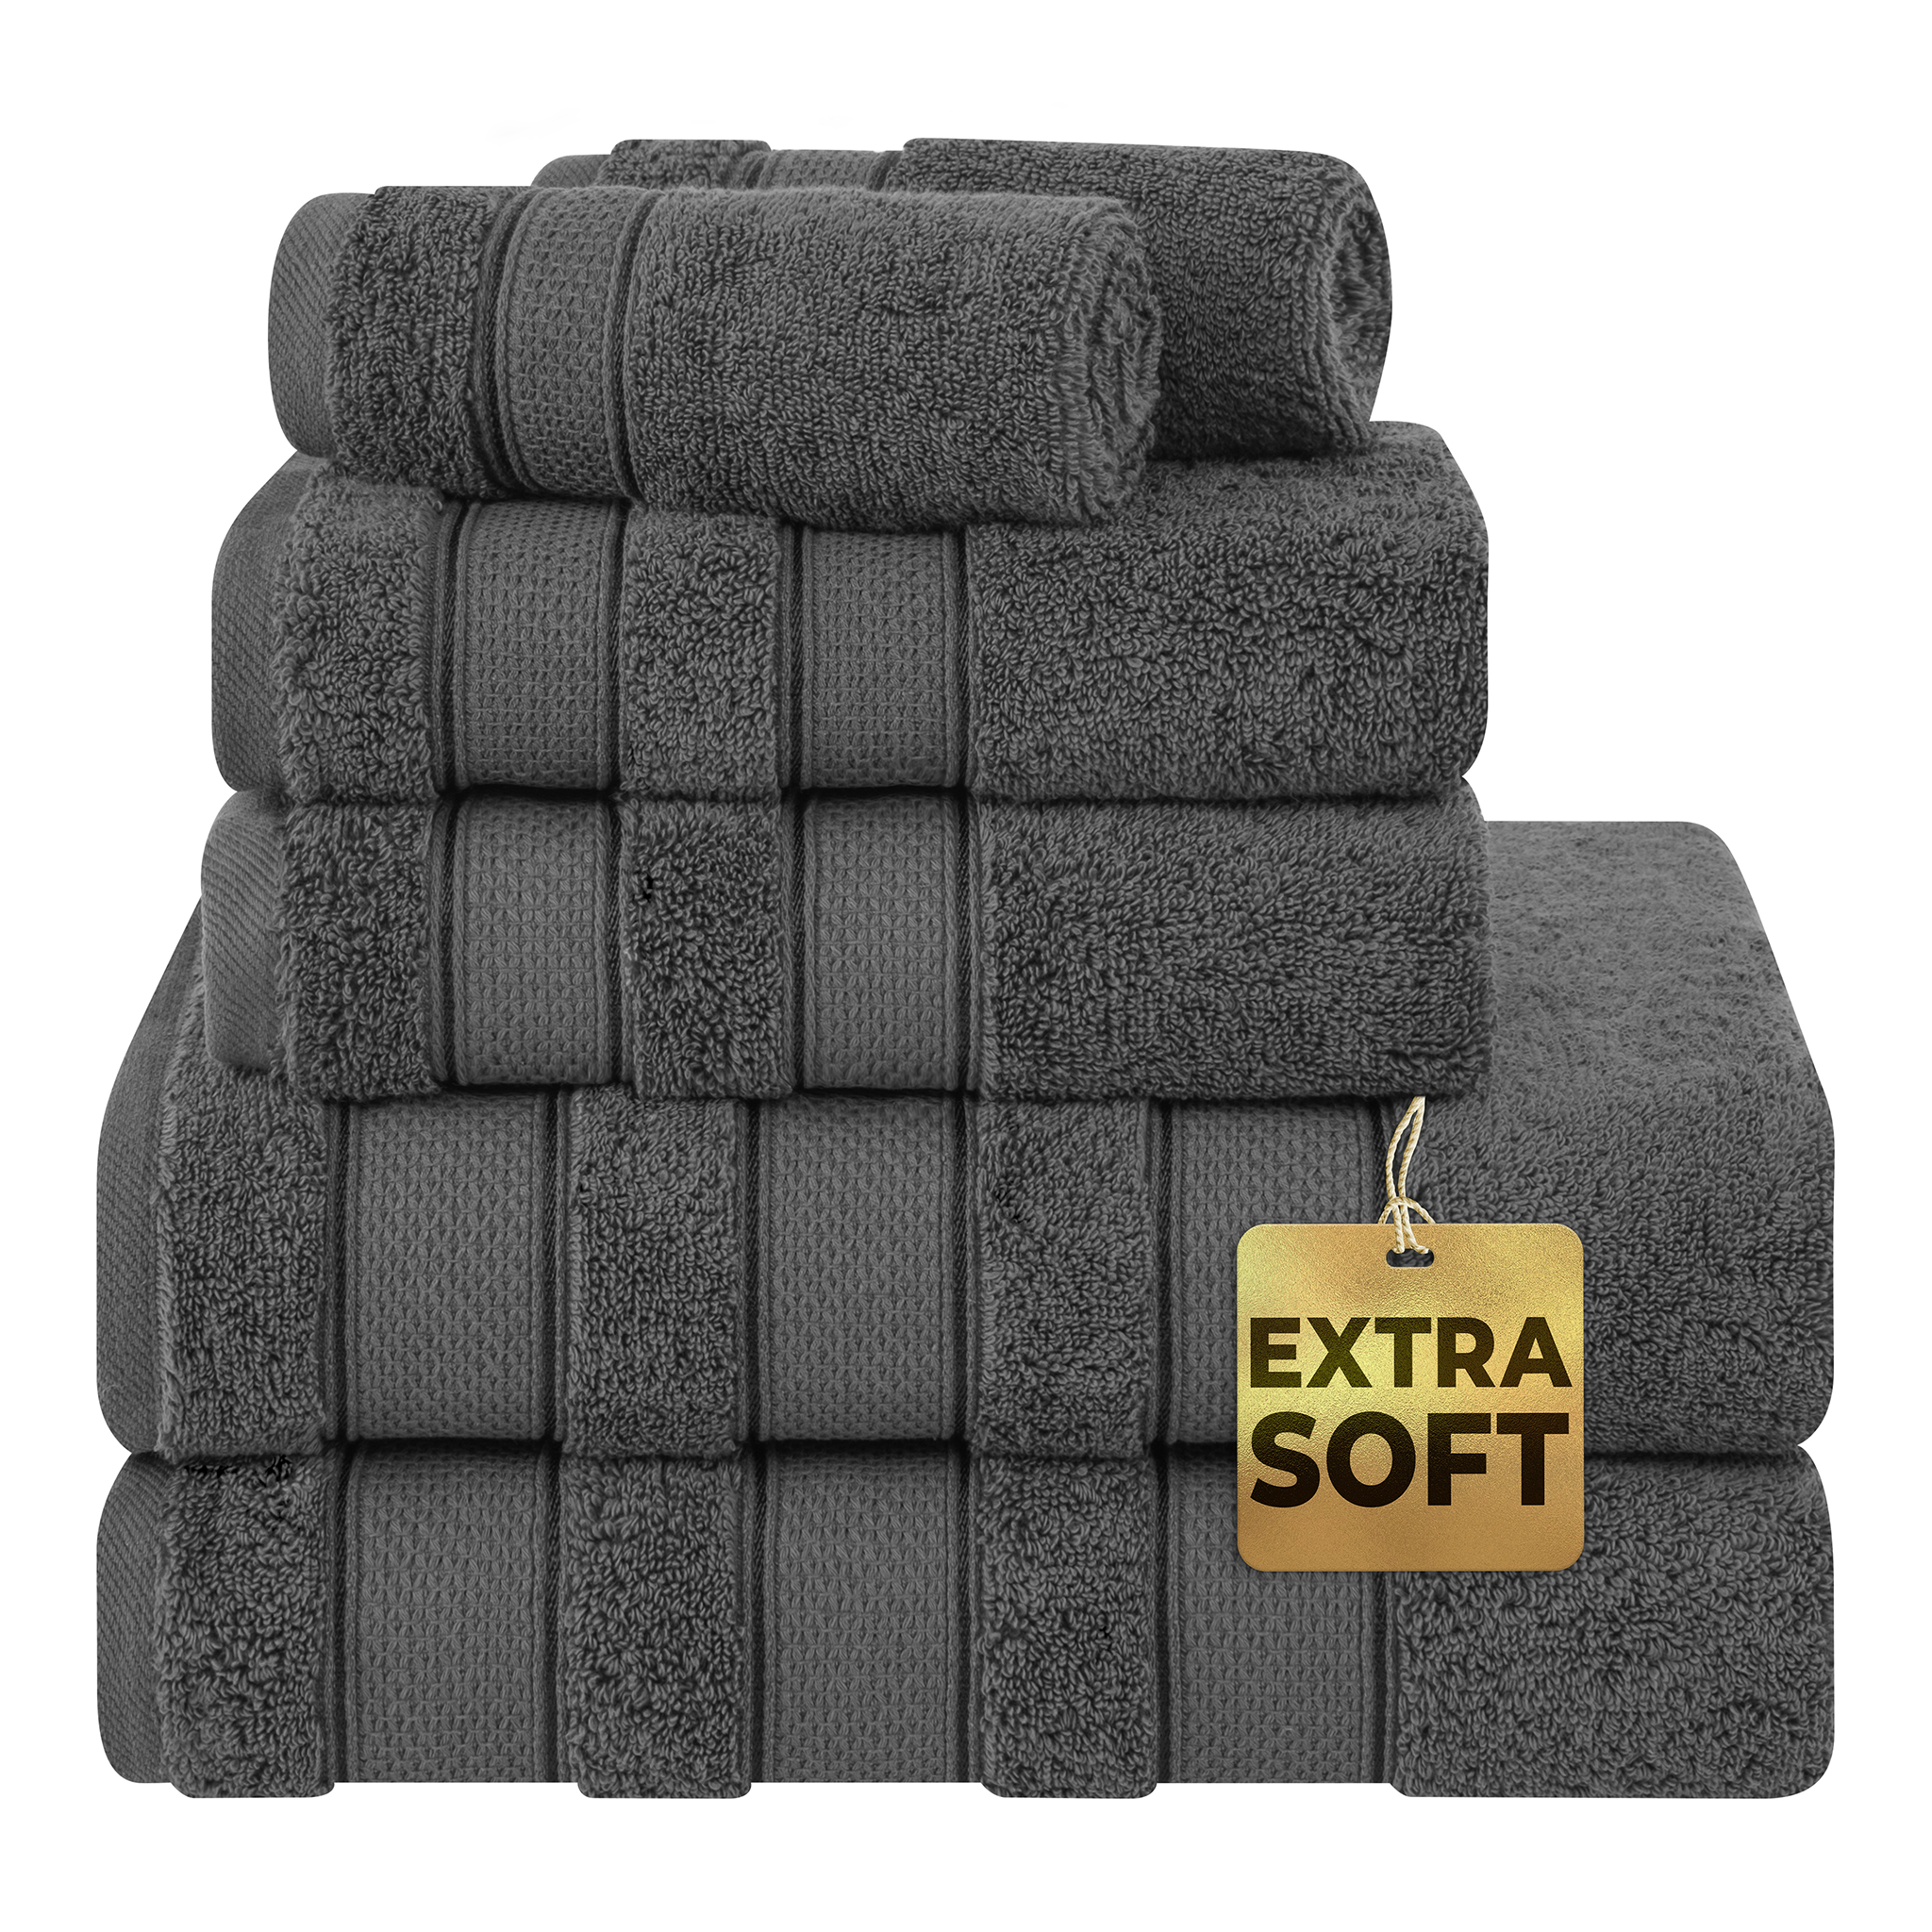 American Soft Linen - Salem 6 Piece Turkish Combed Cotton Luxury Bath Towel Set - 10 Set Case Pack - Gray - 1